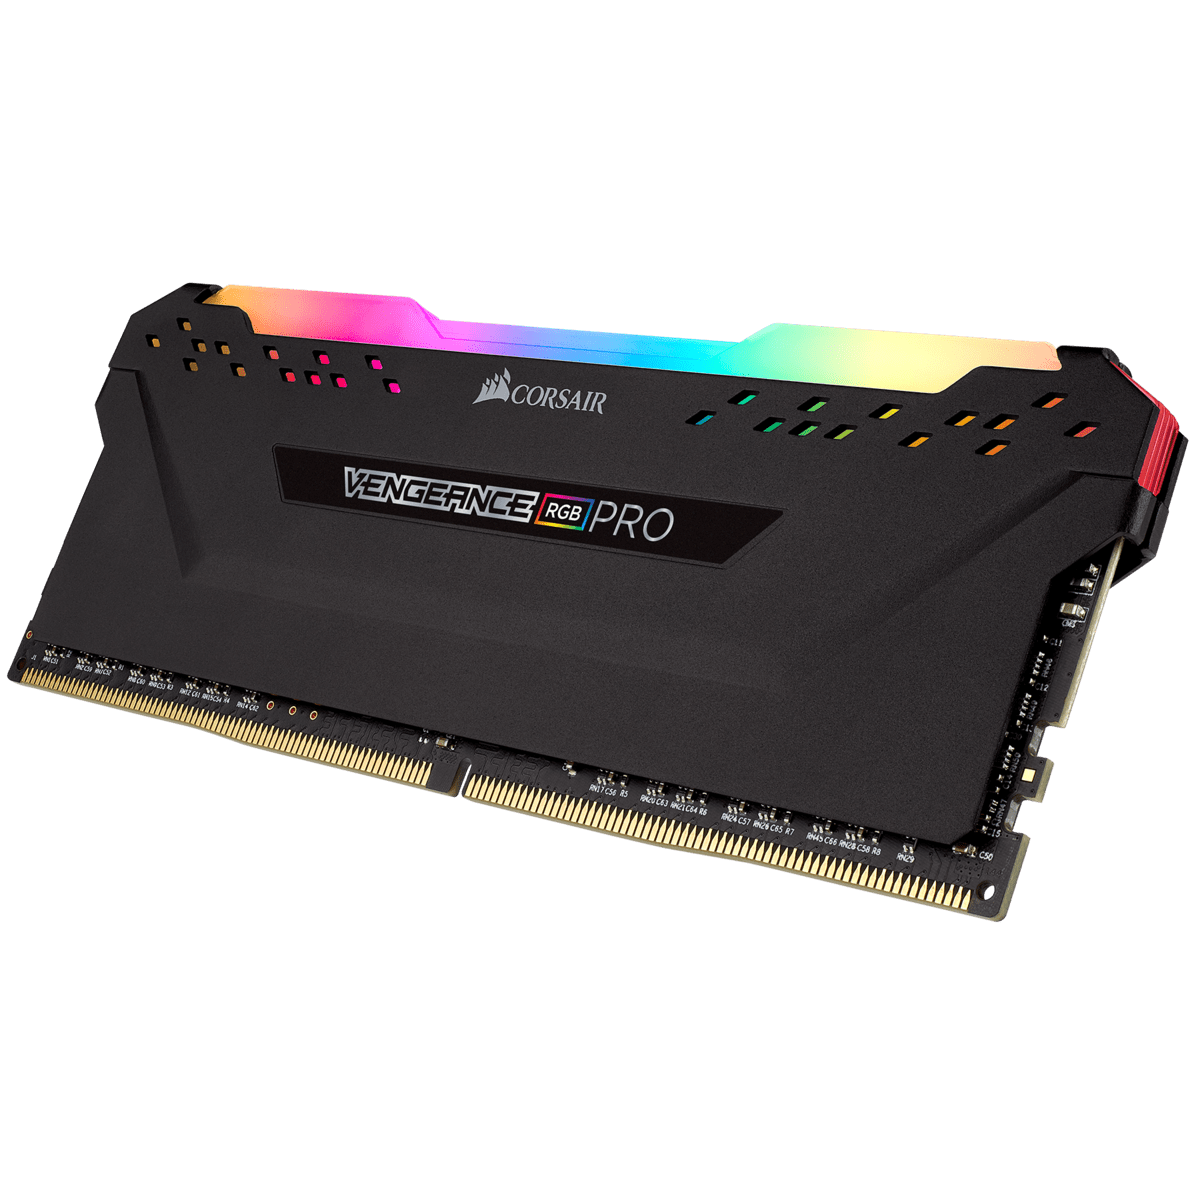 CORSAIR VENGEANCE RGB PRO 8GB DDR4 3000MHz At Lowest Price